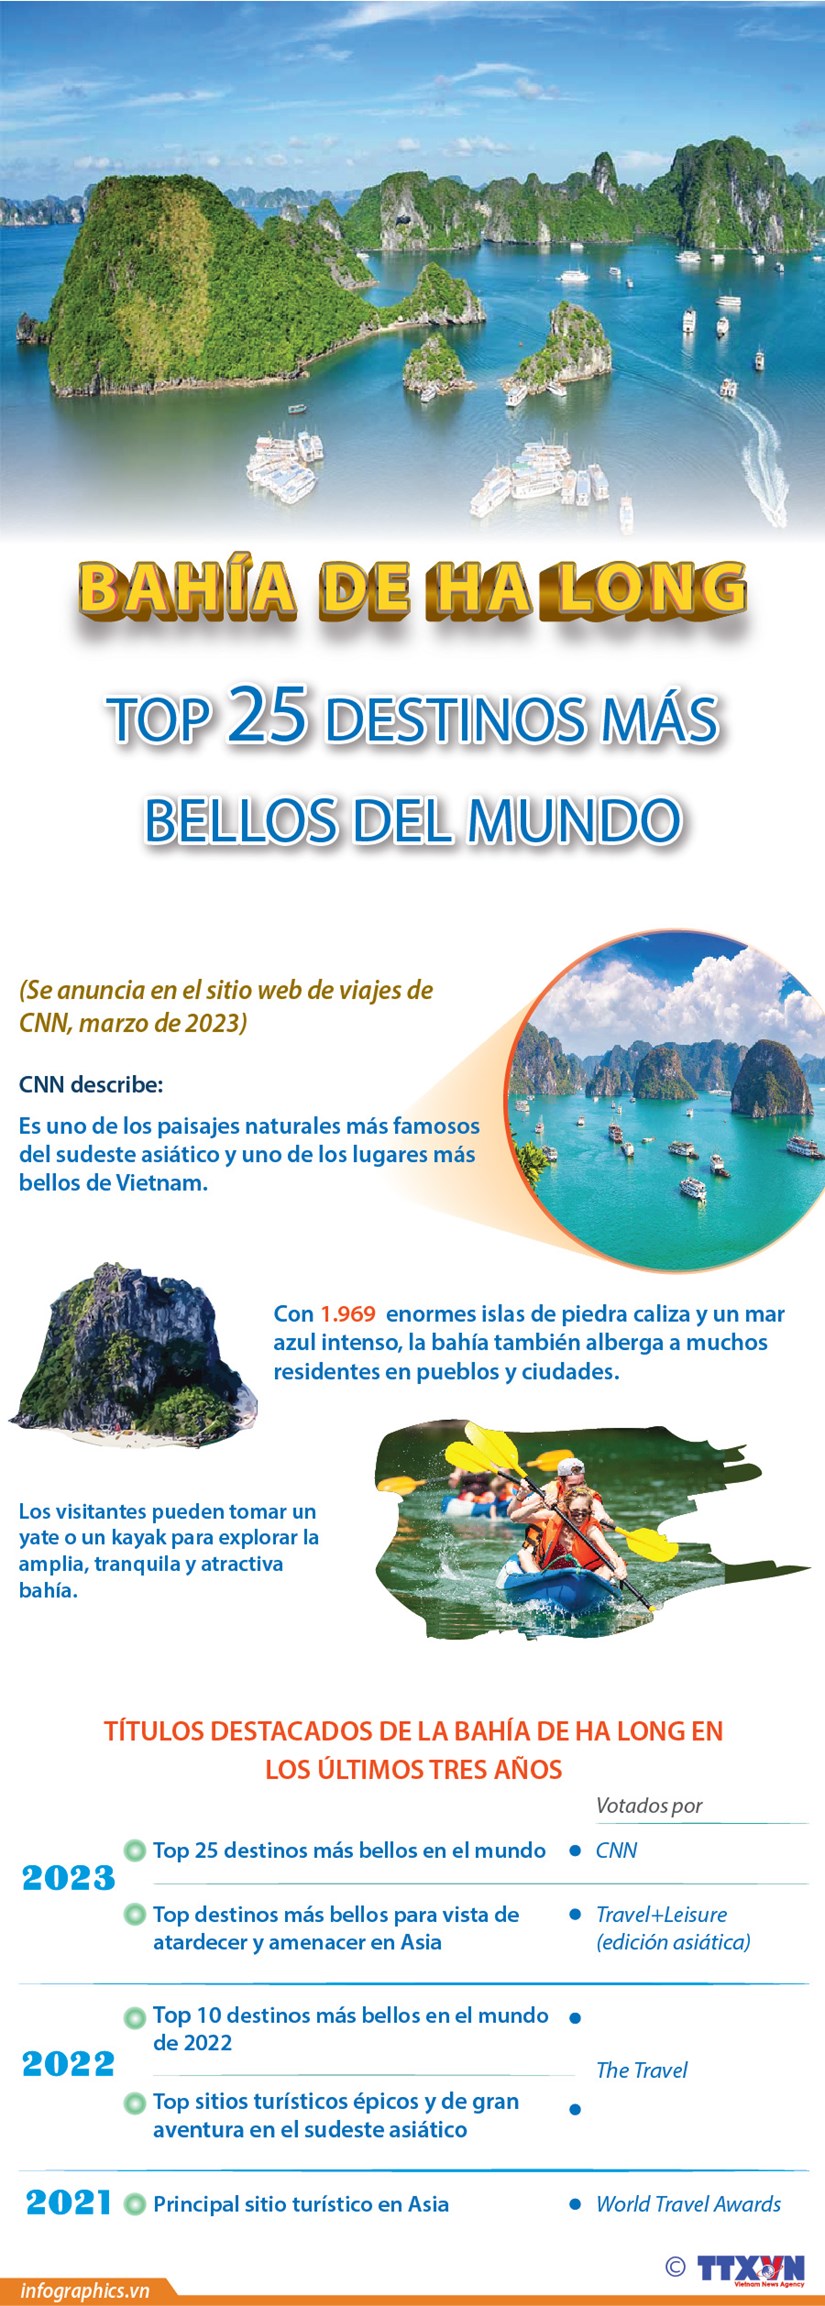 Bahia de Ha Long, top 25 destinos mas bellos del mundo hinh anh 1